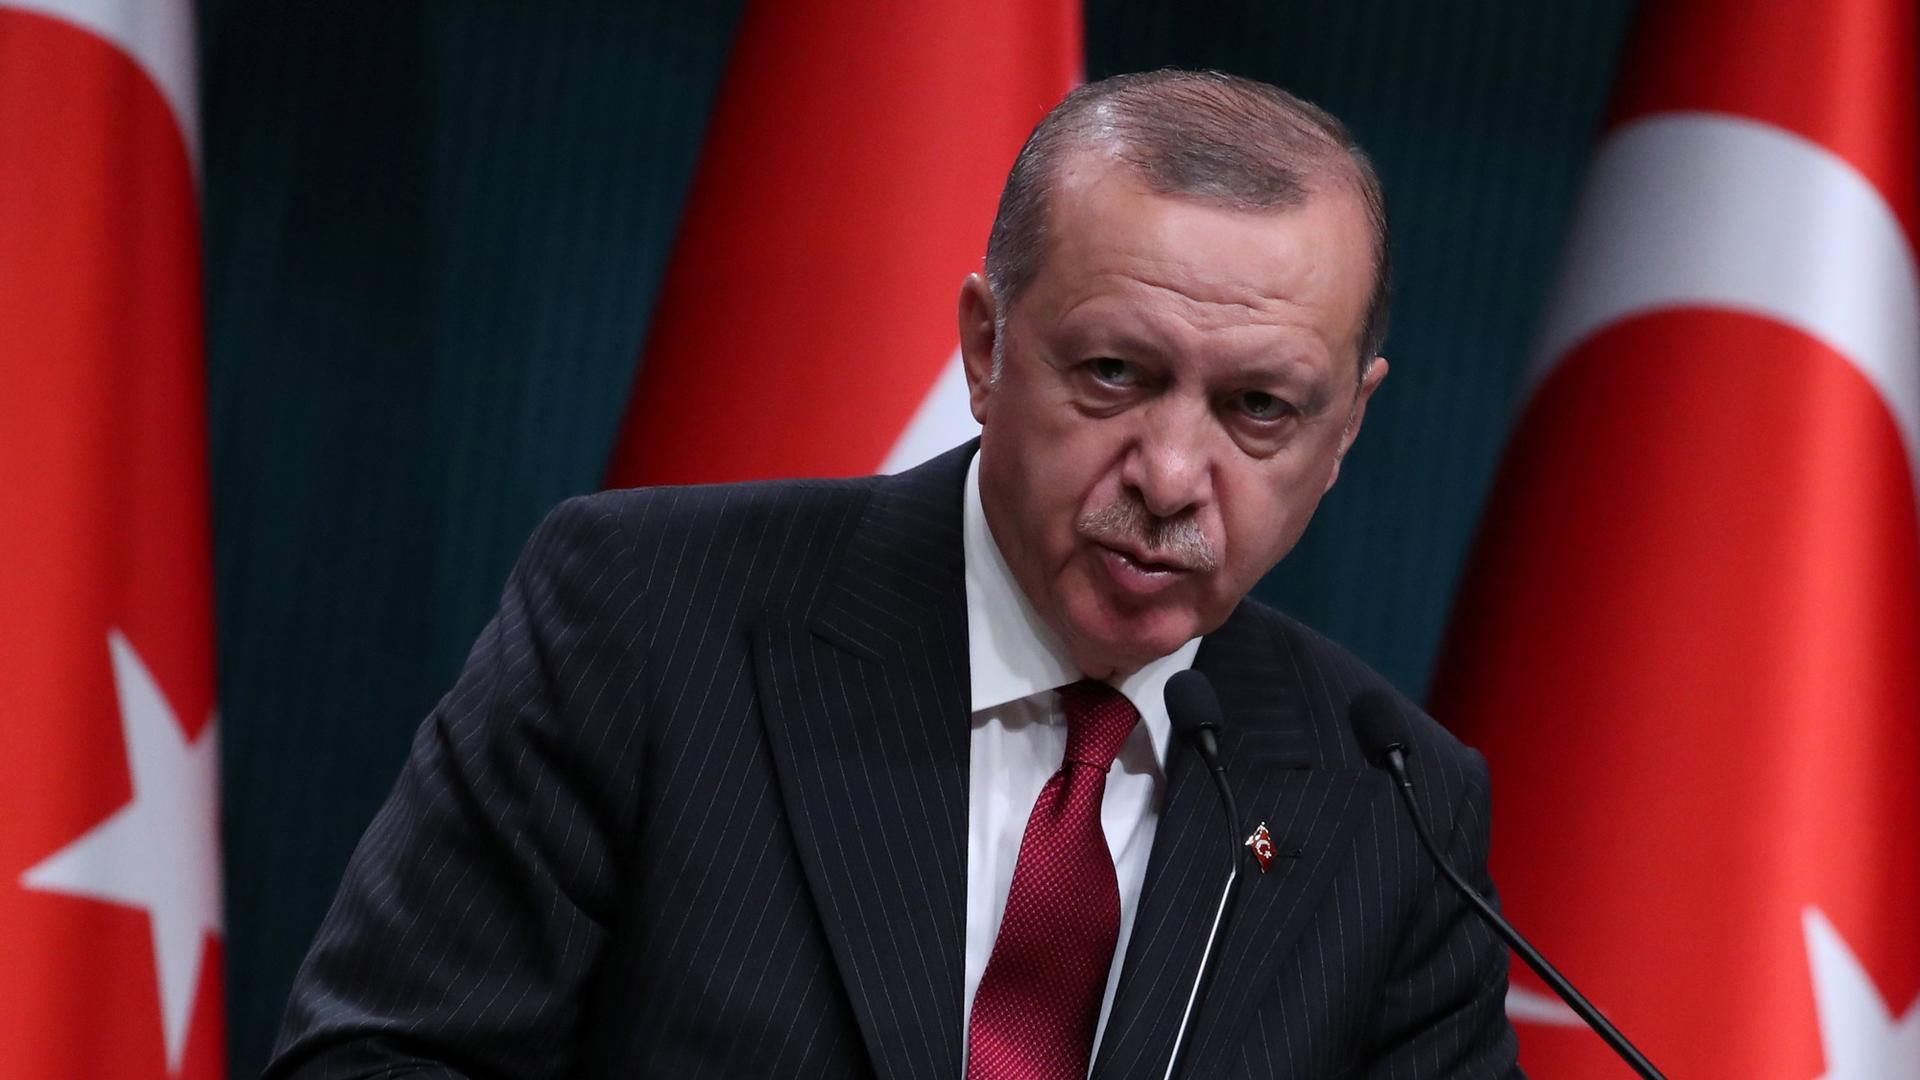 Turkish President Tayyip Erdoğan is shown speaking at a podium with Turkish flags behind him.